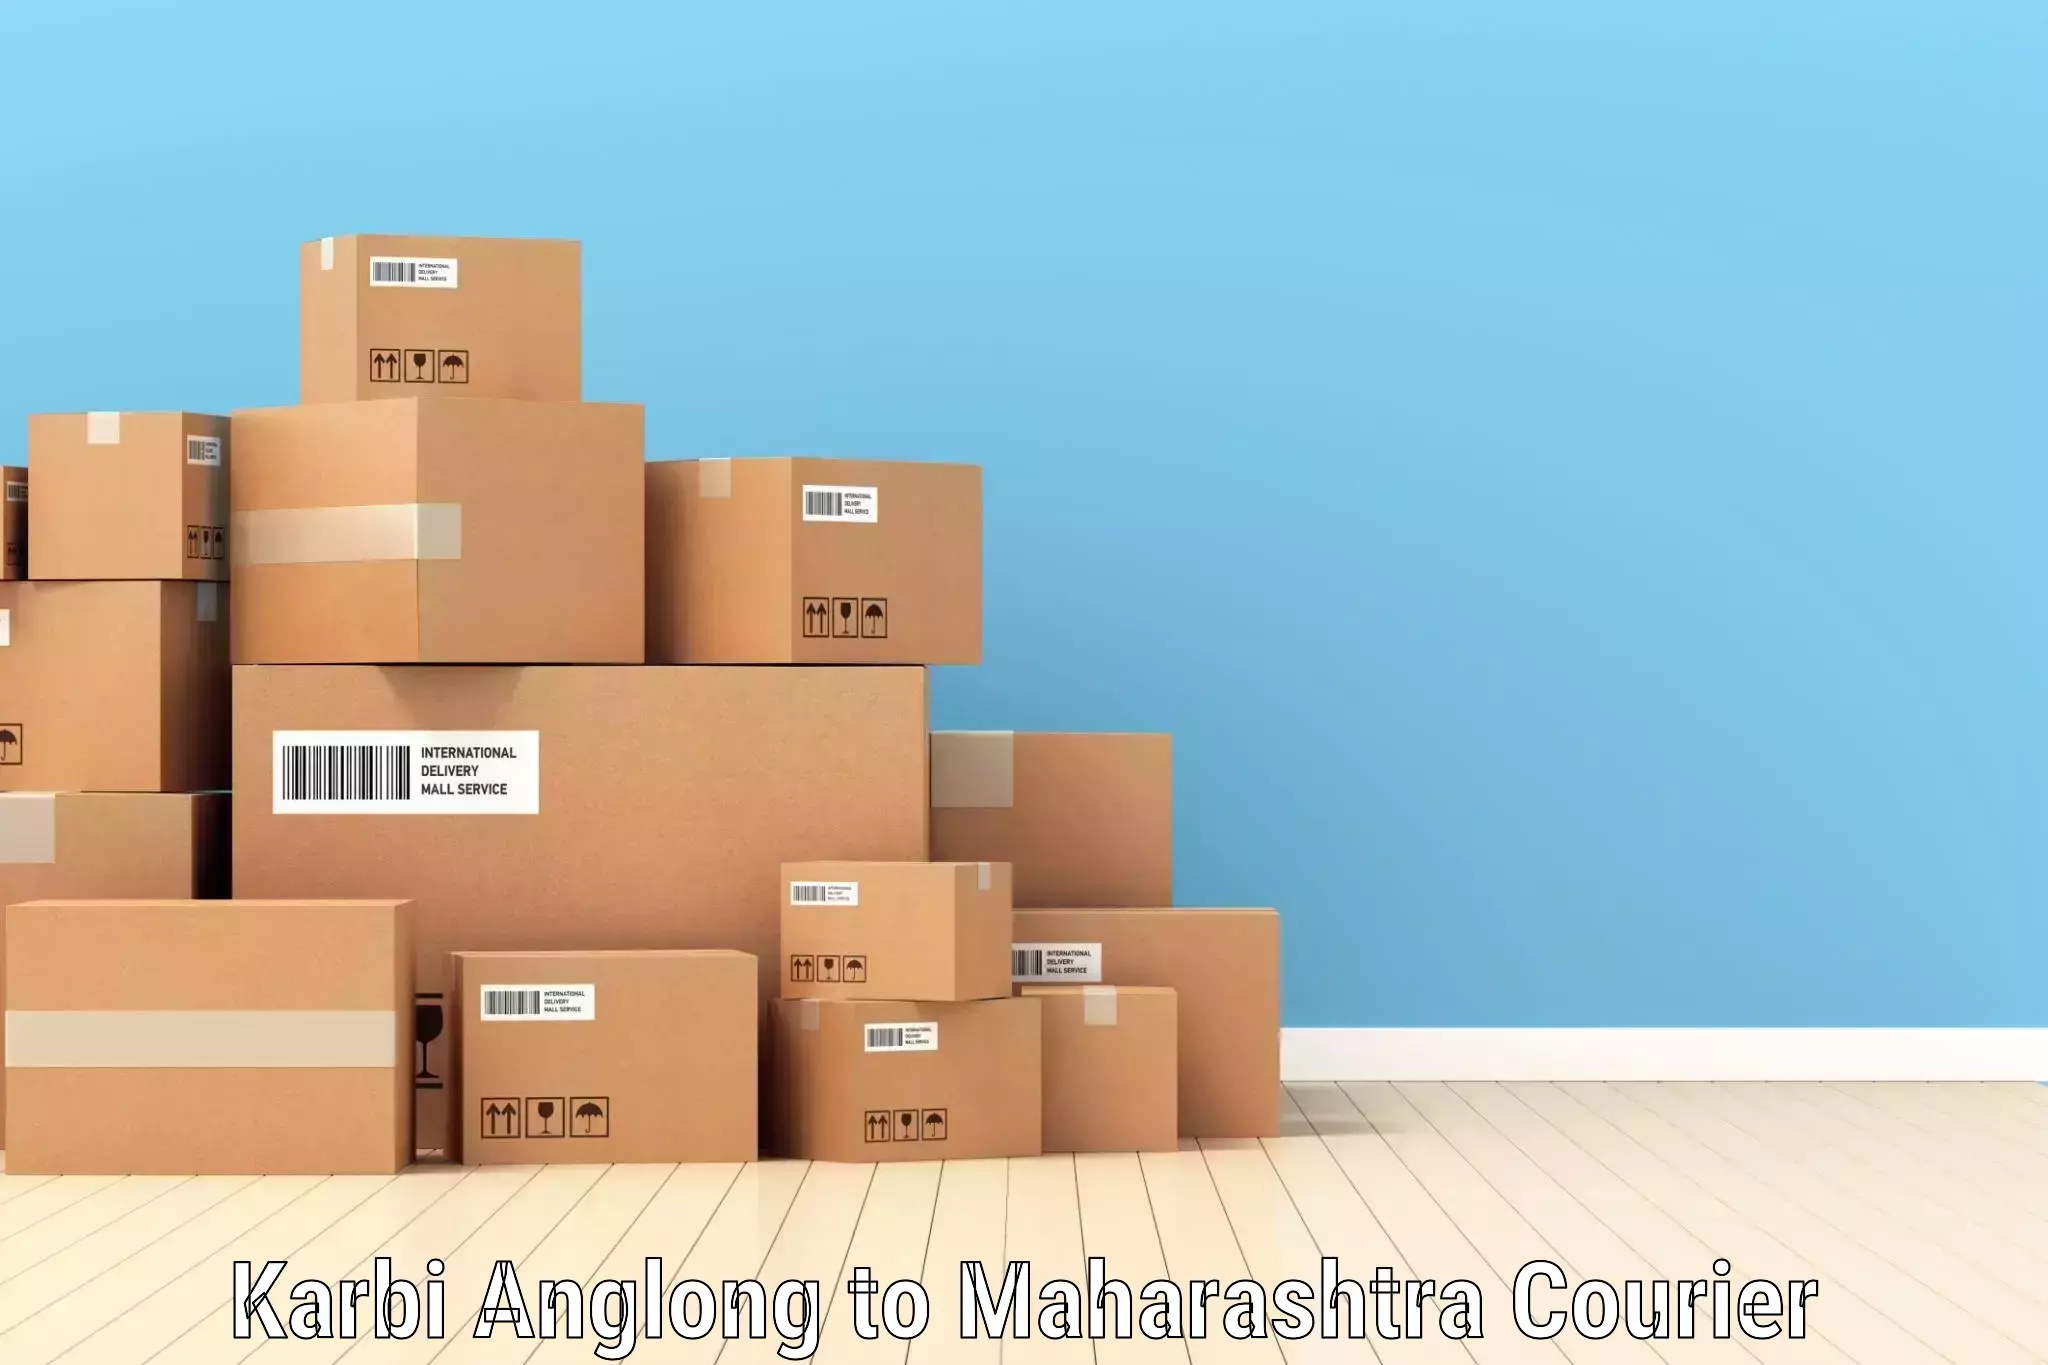 Customer-centric shipping Karbi Anglong to Latur